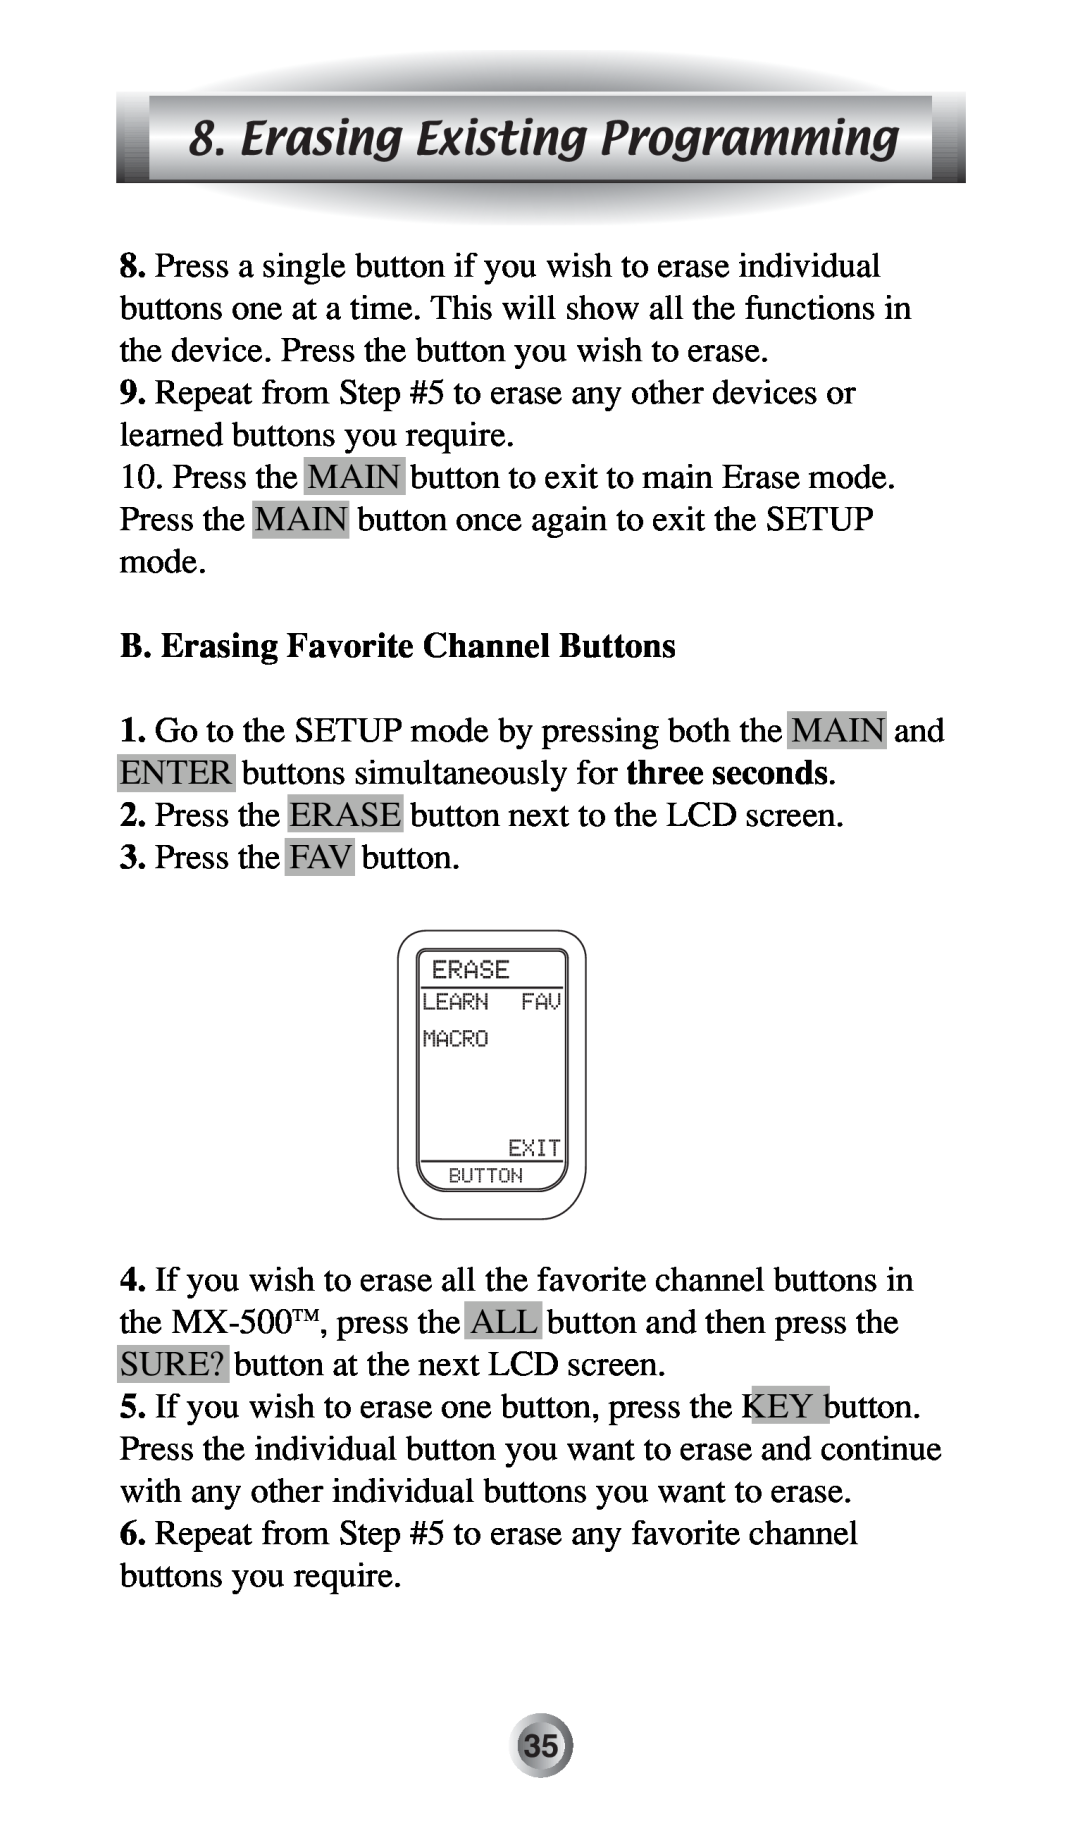 Radio Shack MX-500TM manual Erasing Existing Programming, B. Erasing Favorite Channel Buttons 